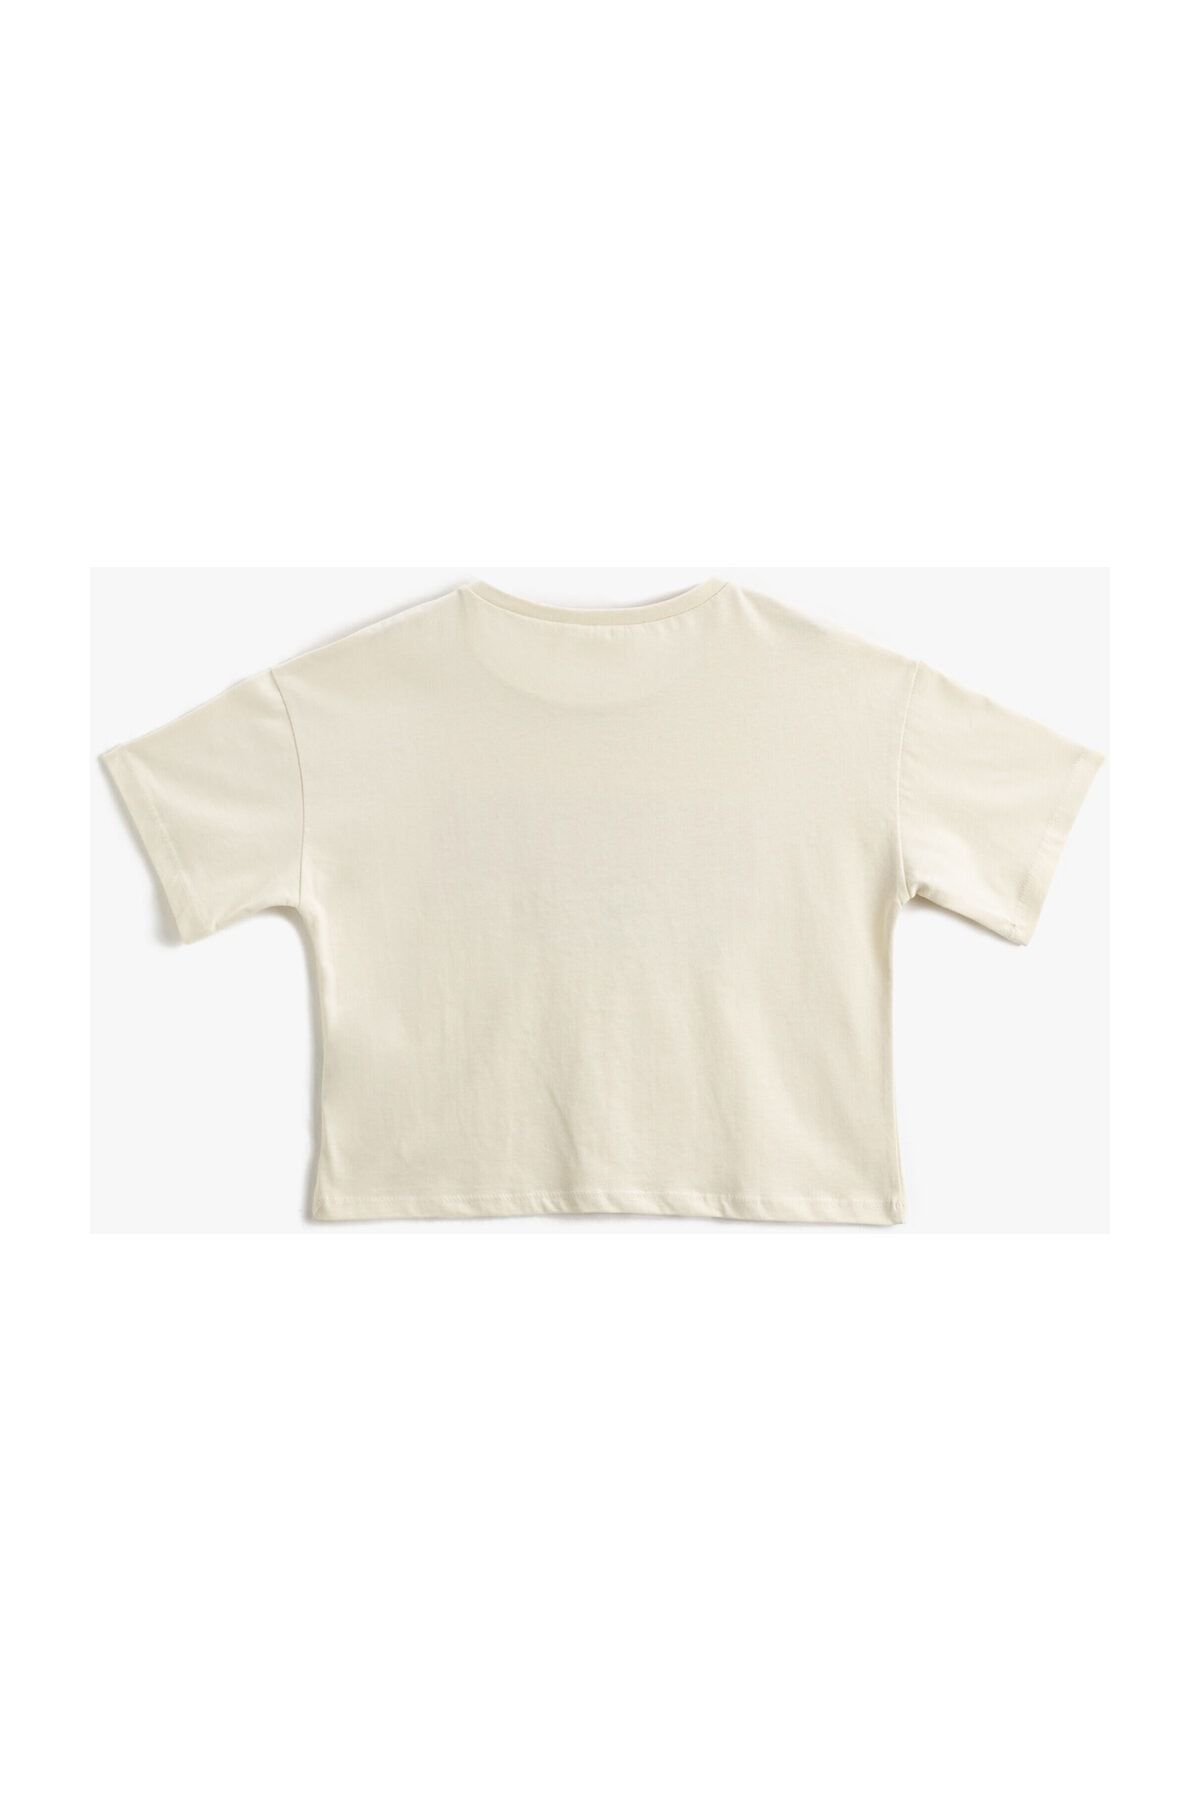 Koton تی شرت کراپ سایز آستین کوتاه یقه خدمه چاپ شده